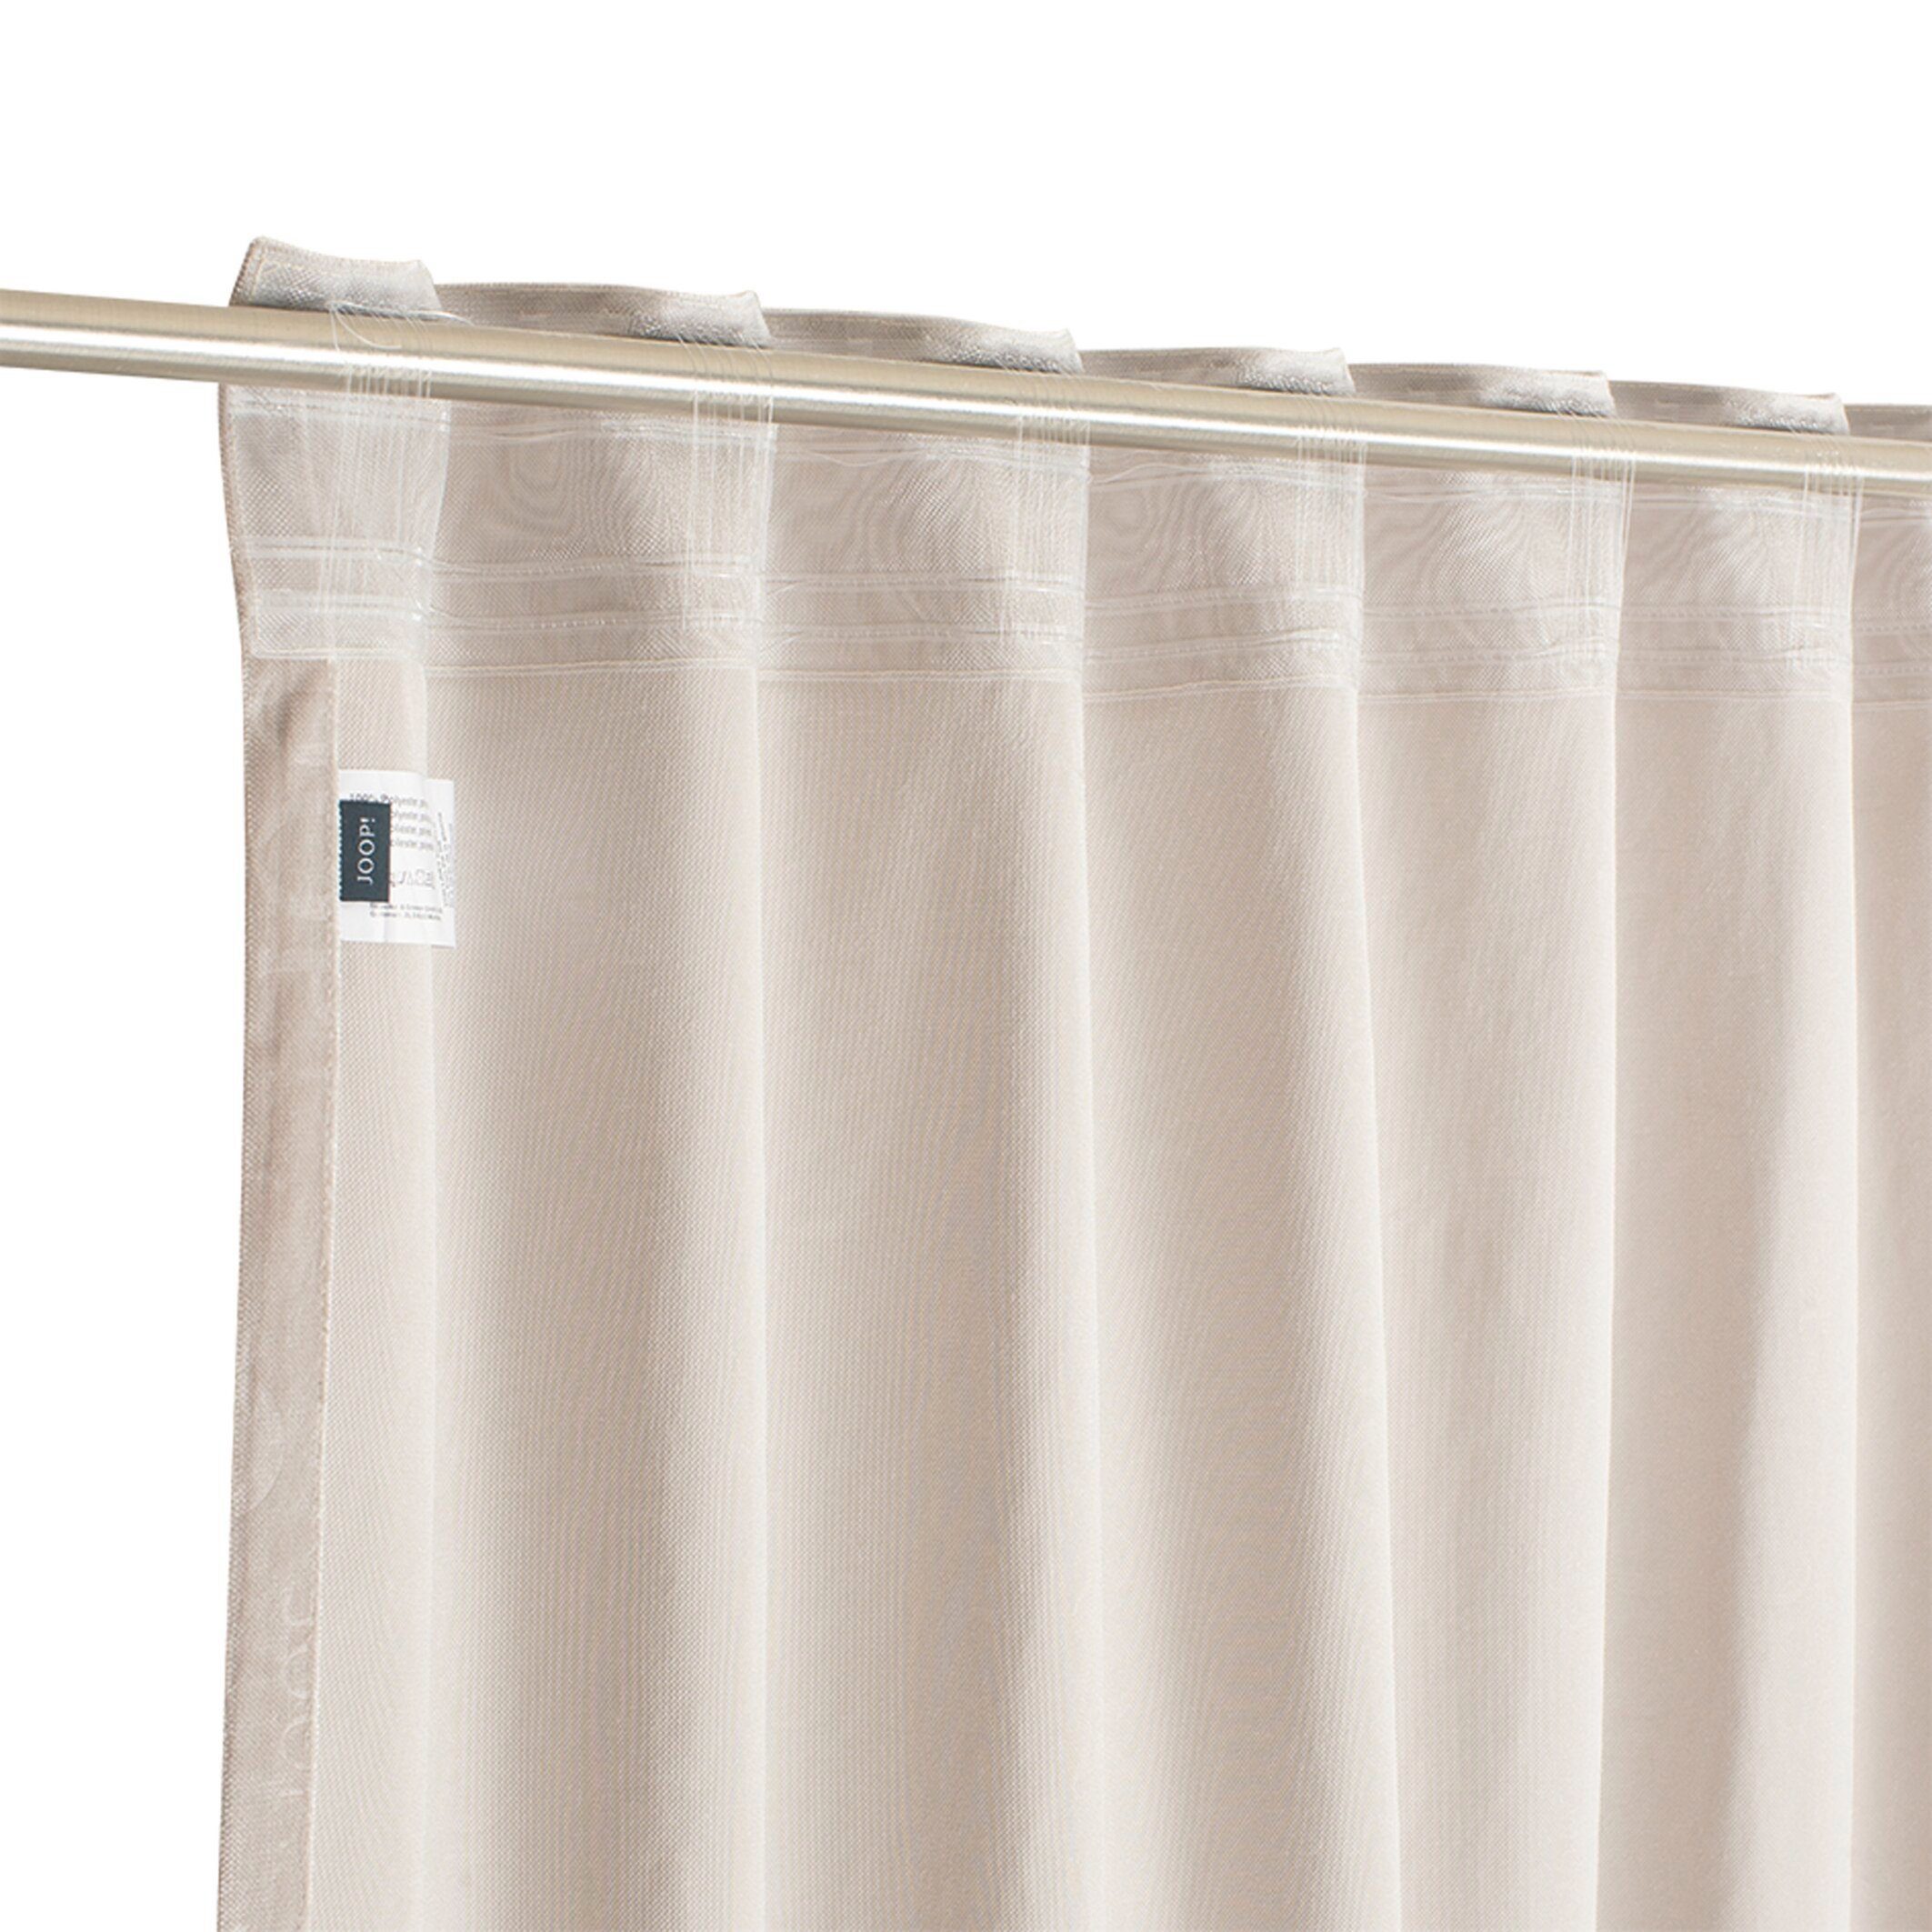 Fertigvorhang, Textil Joop!, Beige blickdicht, Vorhang (1 LIVING JOOP! St), MATCH -